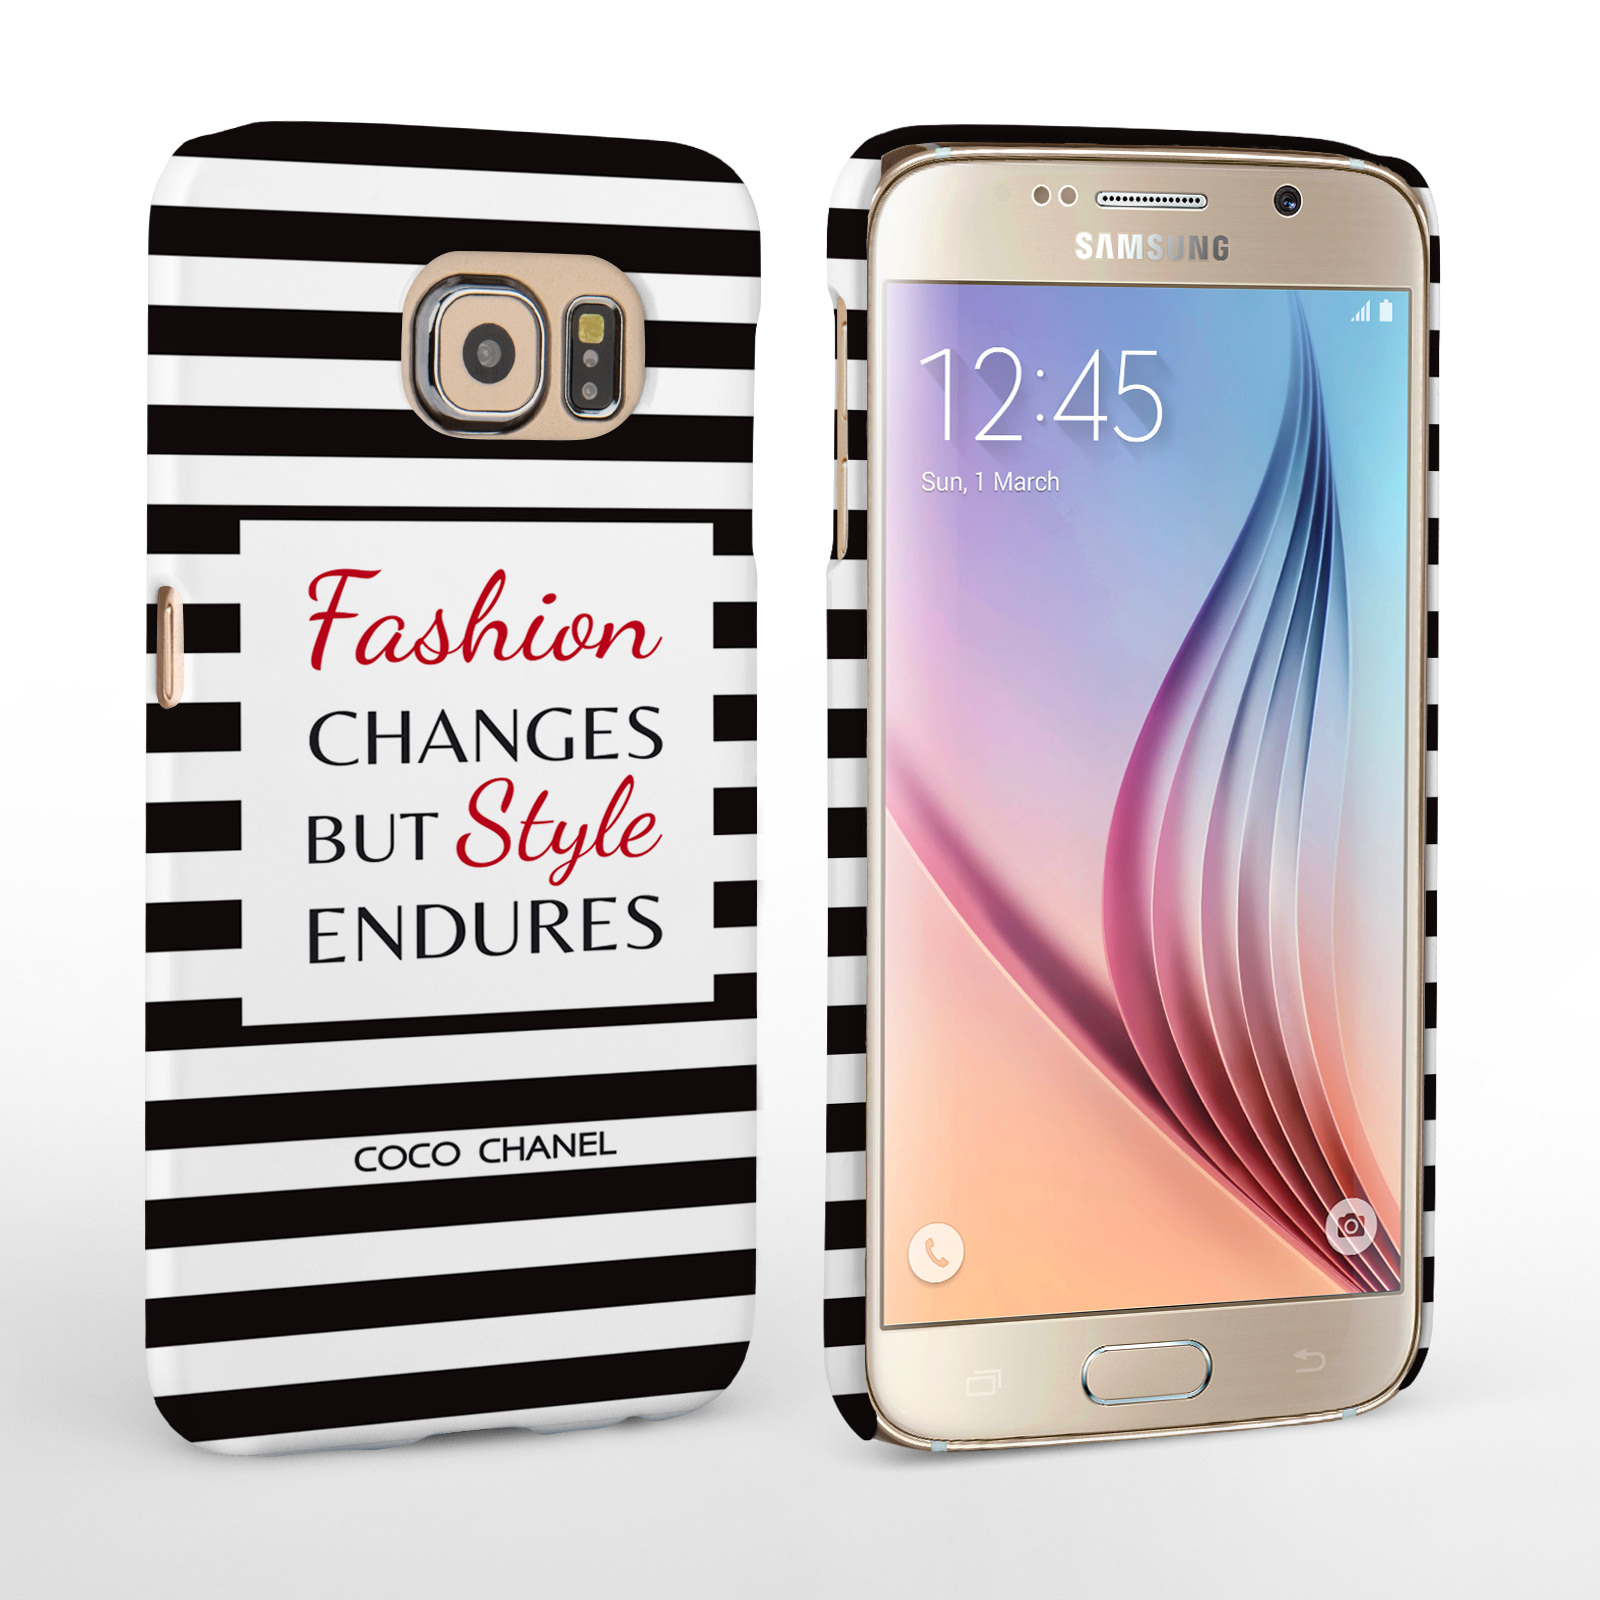 Caseflex Samsung Galaxy S6 Chanel ‘Fashion Changes’ Quote Case – Black and White